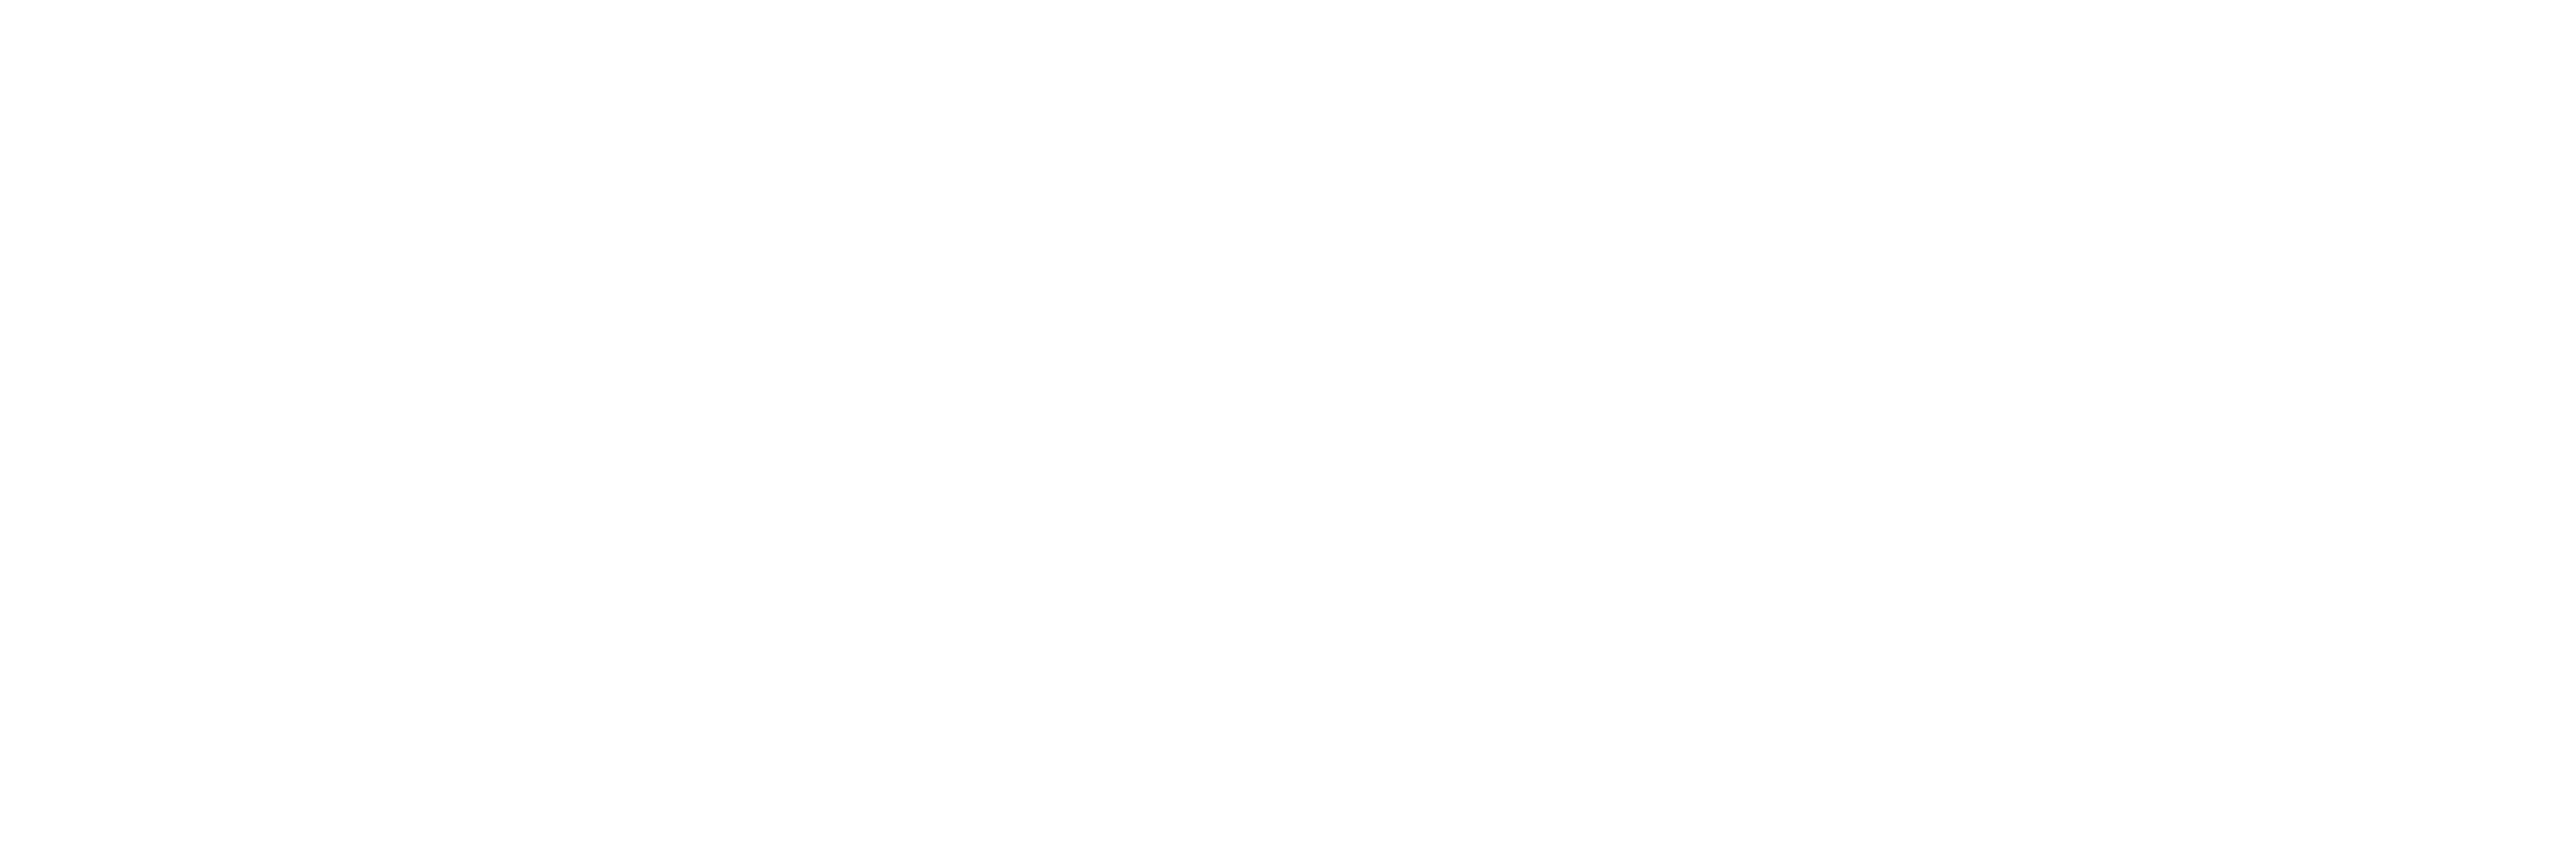 Dealership Logo - Dealership News. Automotive News. Car Dealer News